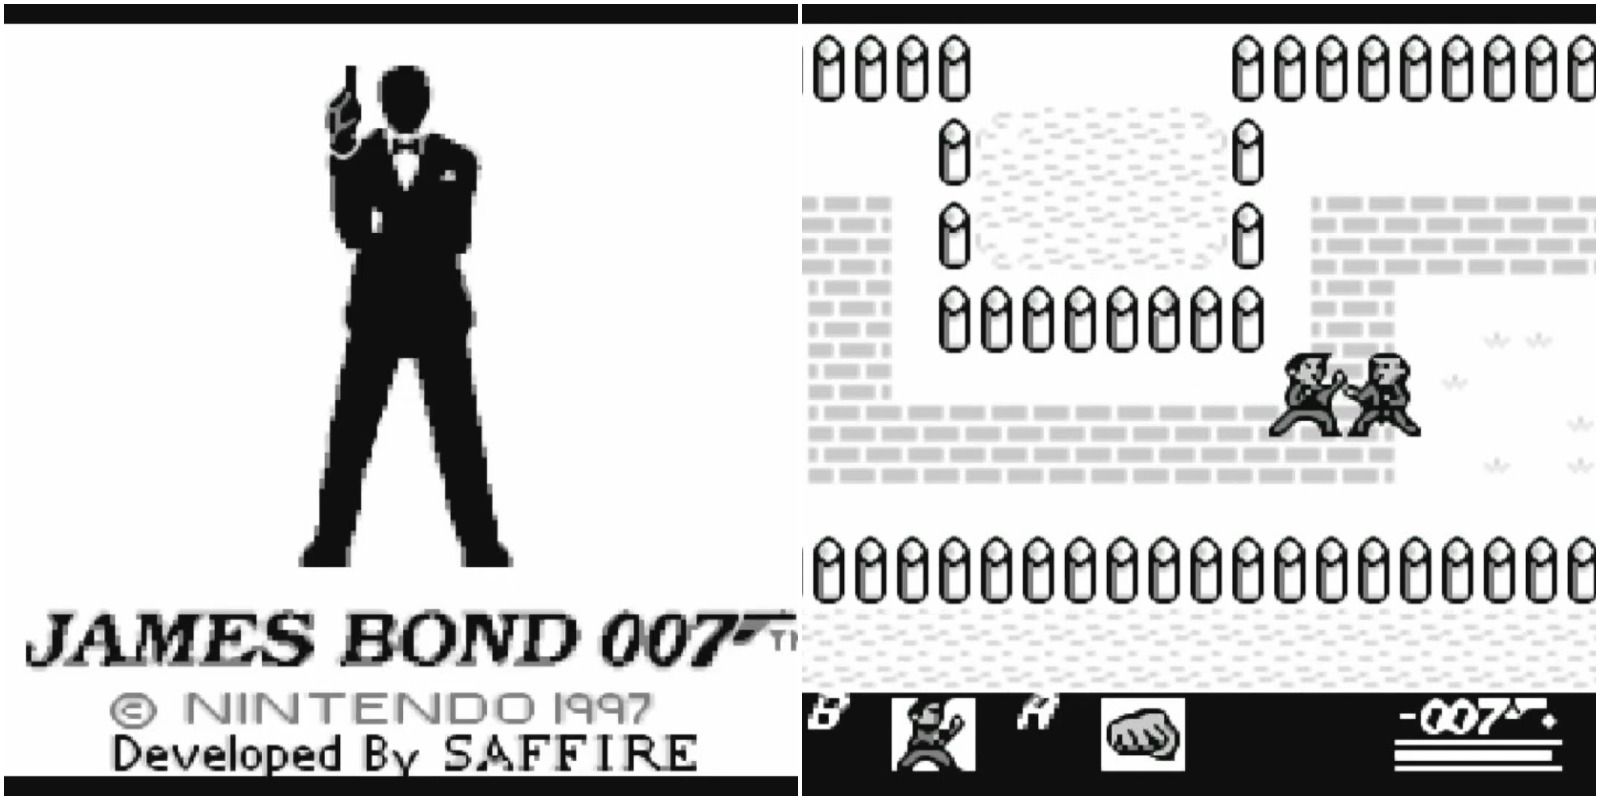 James Bond 007 On GameBoy